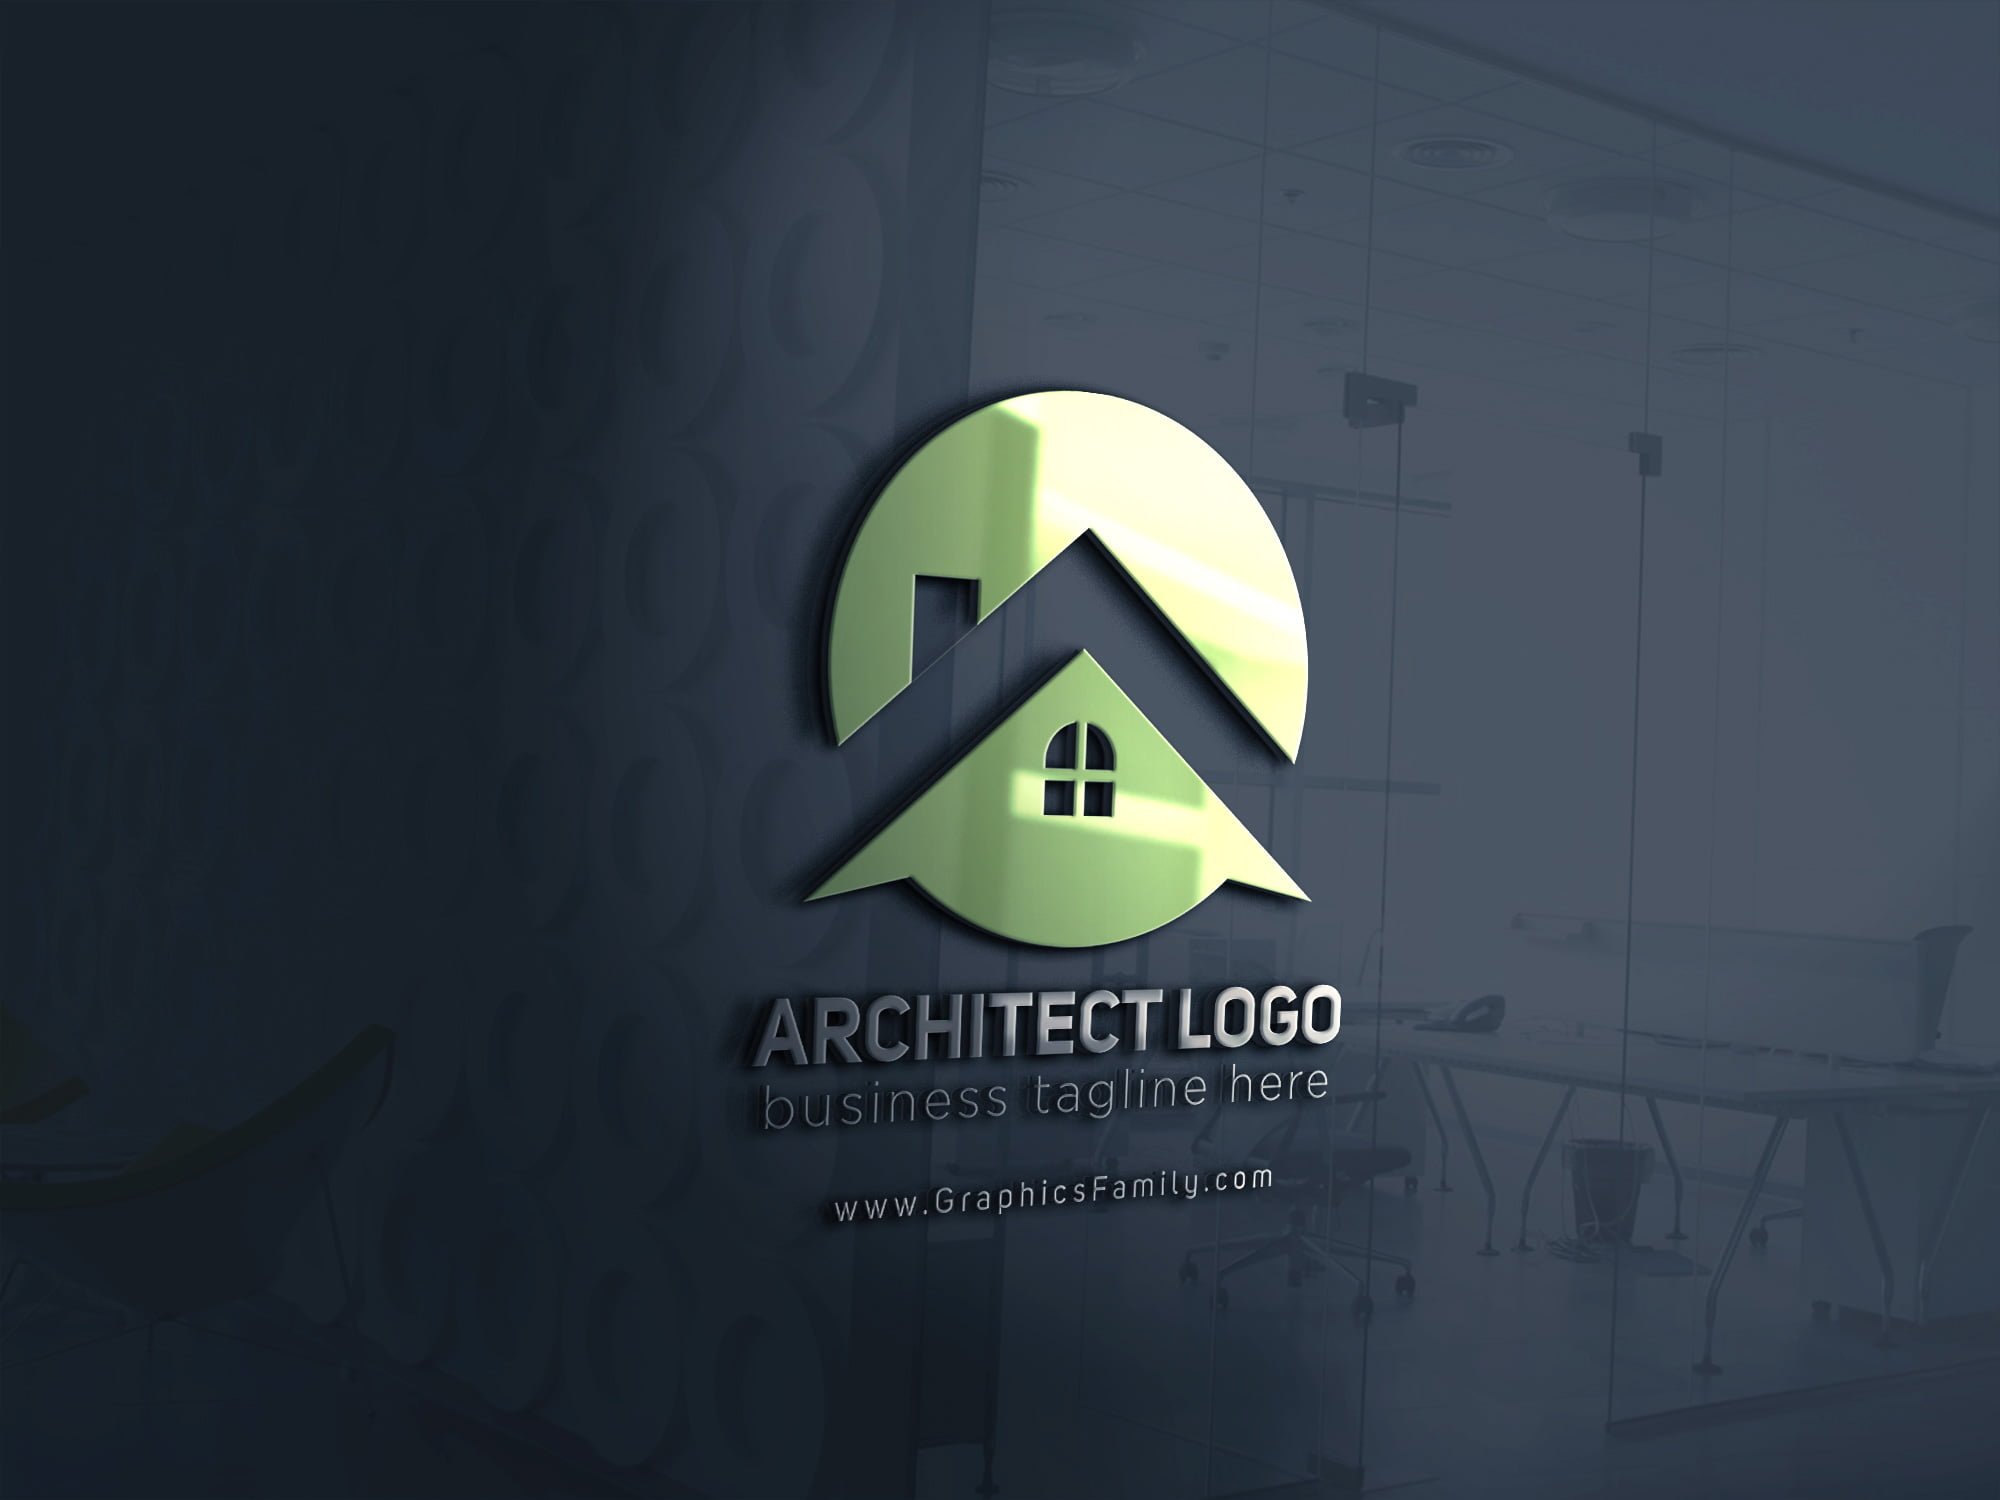 Architect Logo Design Gallery Inspiration Logomix Images